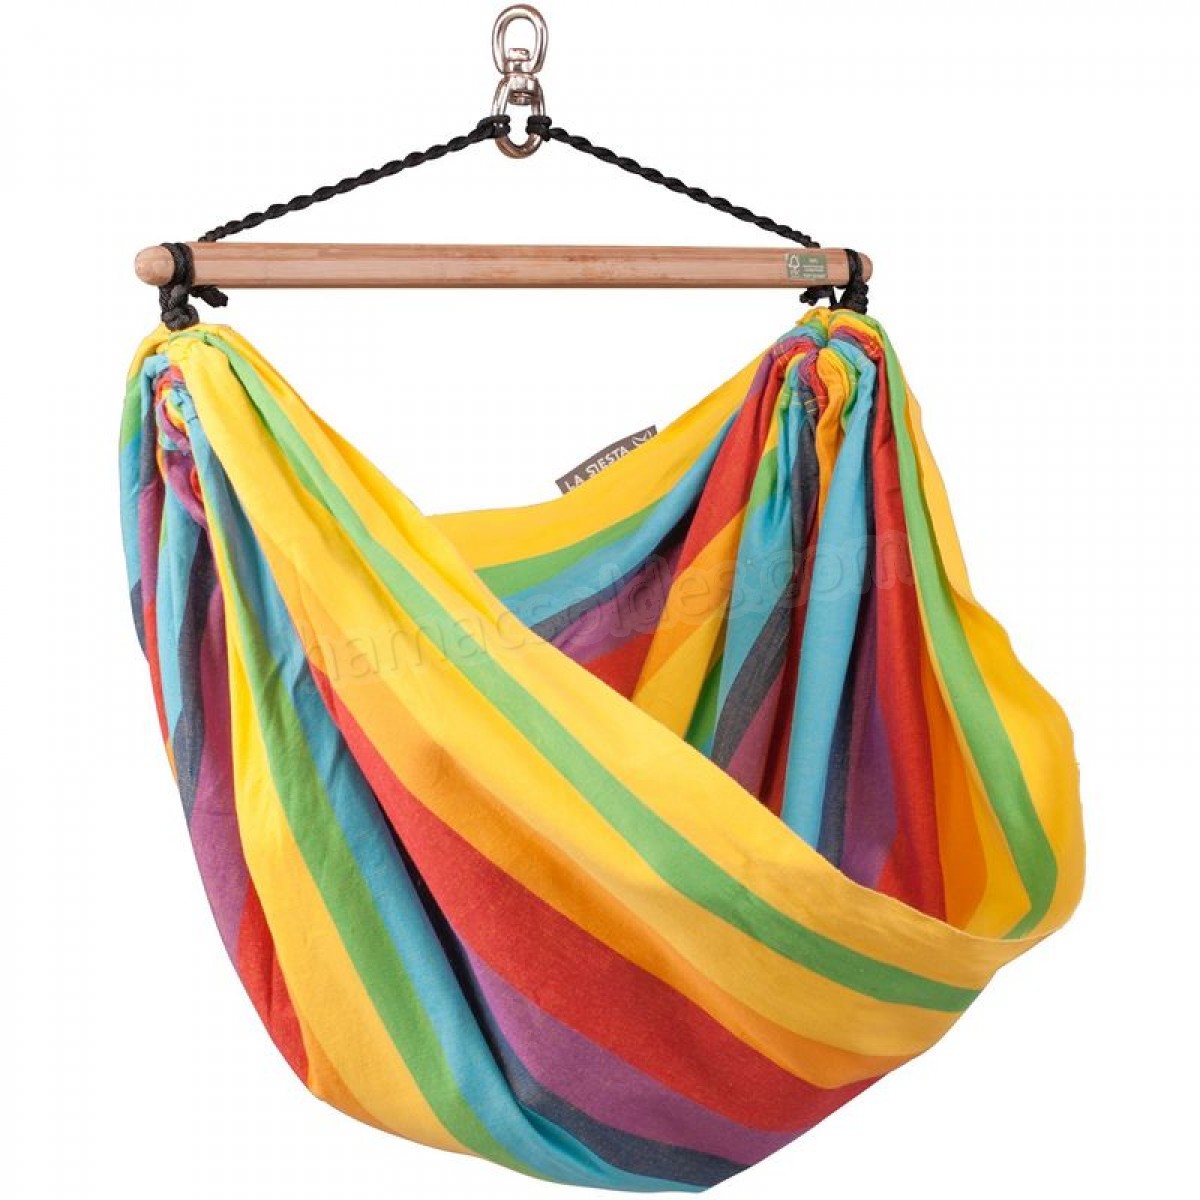 Soldes en ligne Iri Rainbow - Chaise-hamac enfant en coton - Multicolore - Soldes en ligne Iri Rainbow - Chaise-hamac enfant en coton - Multicolore